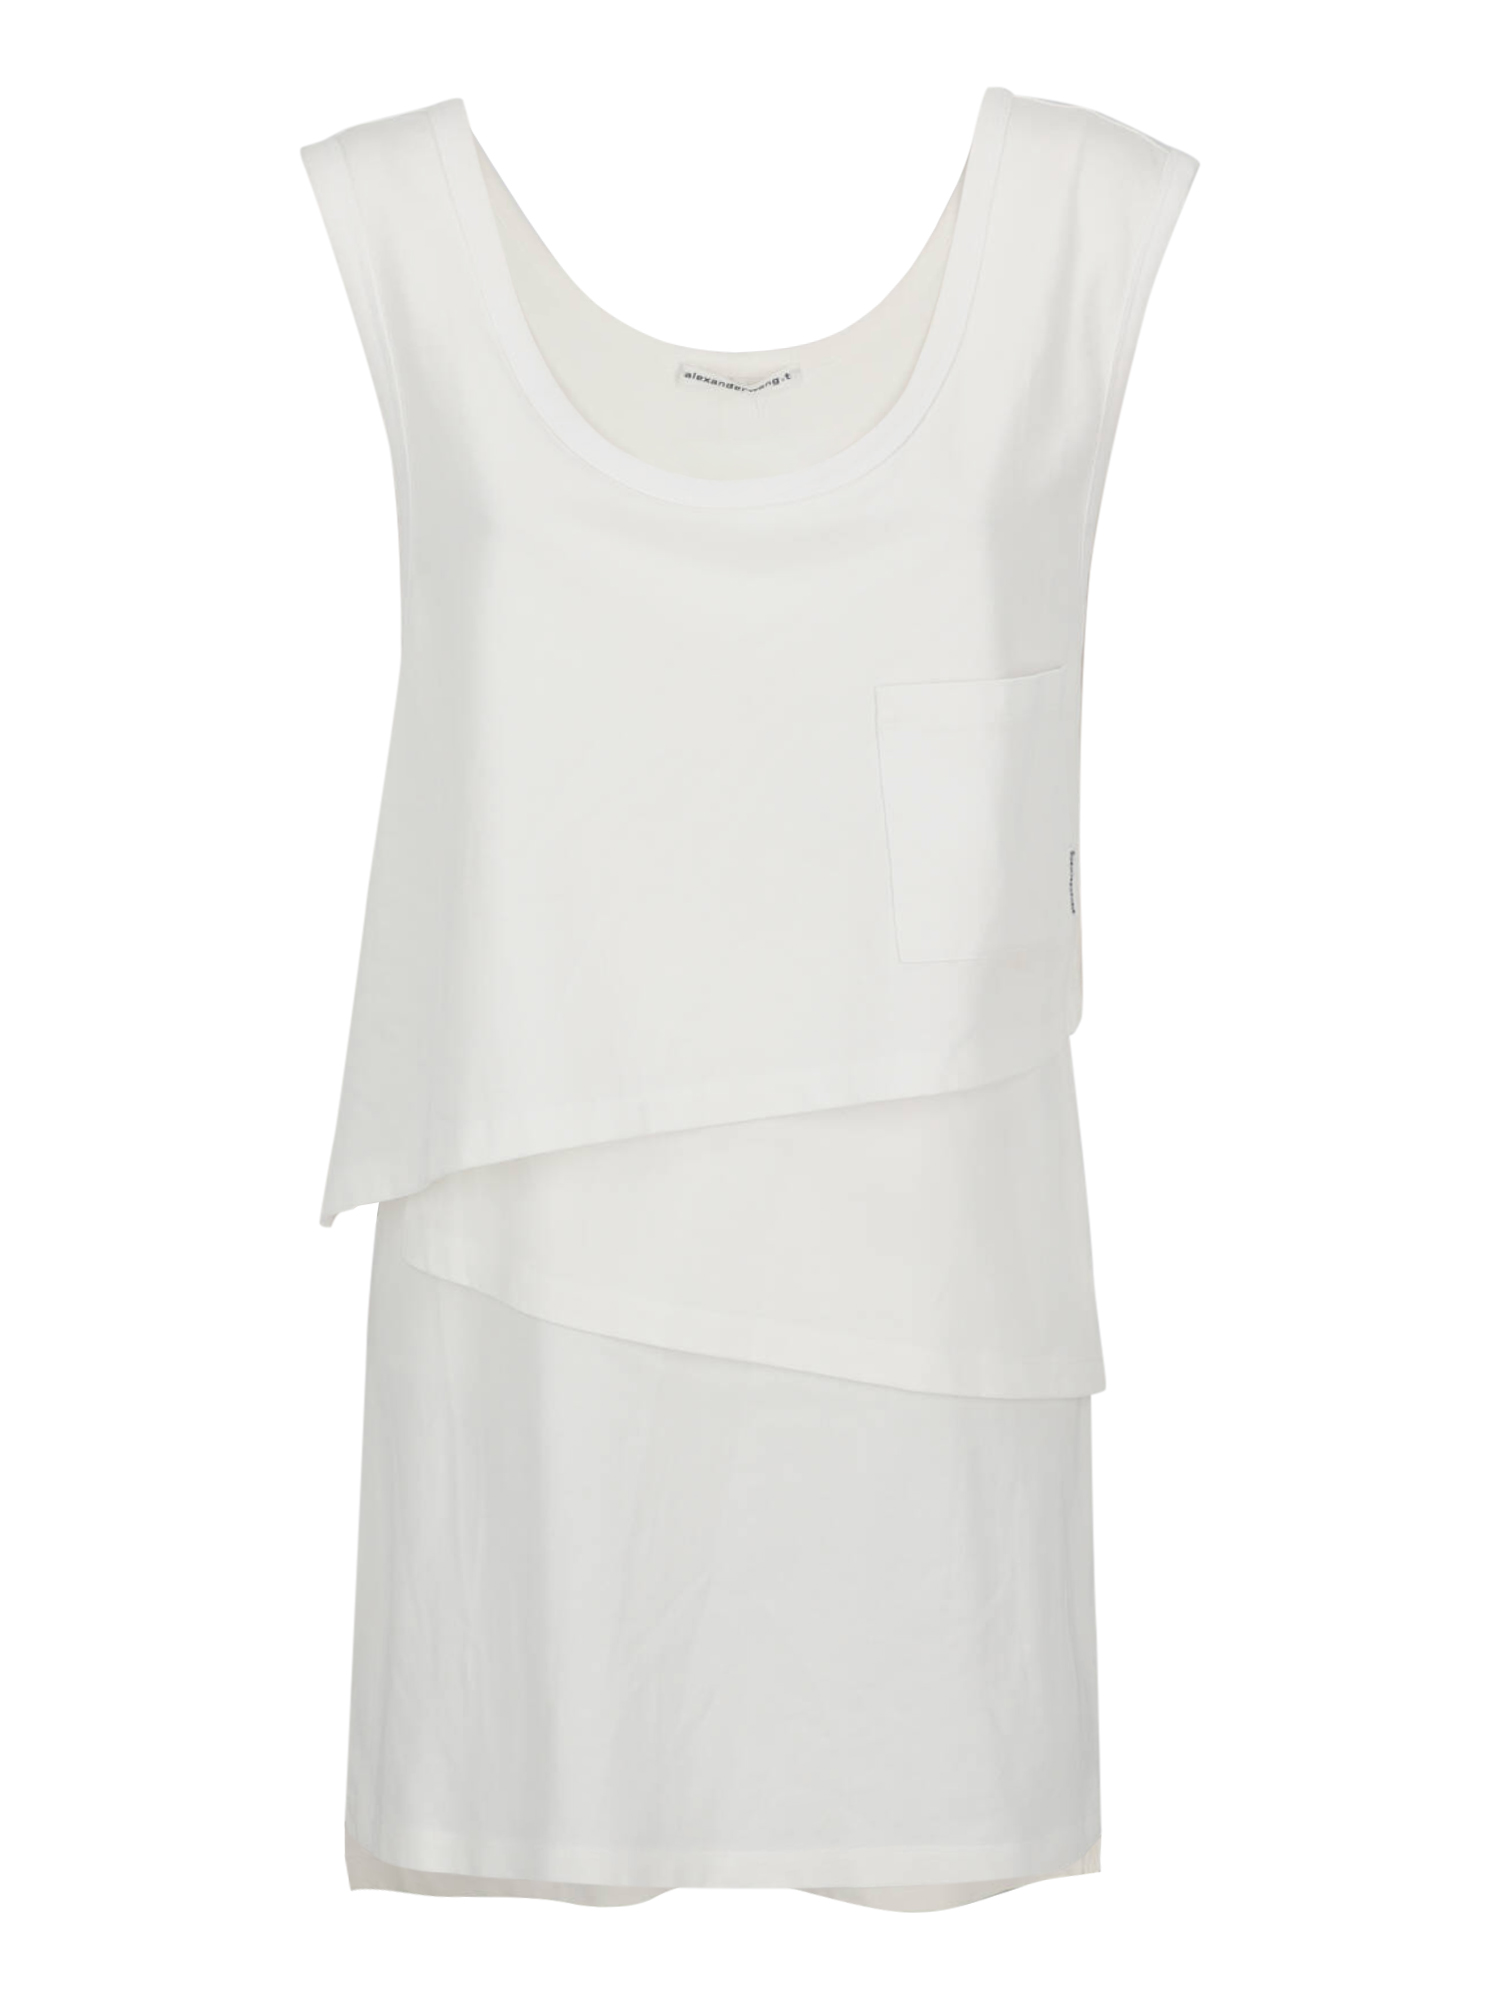 Robes Pour Femme - Alexander Wang - En Cotton White - Taille:  -